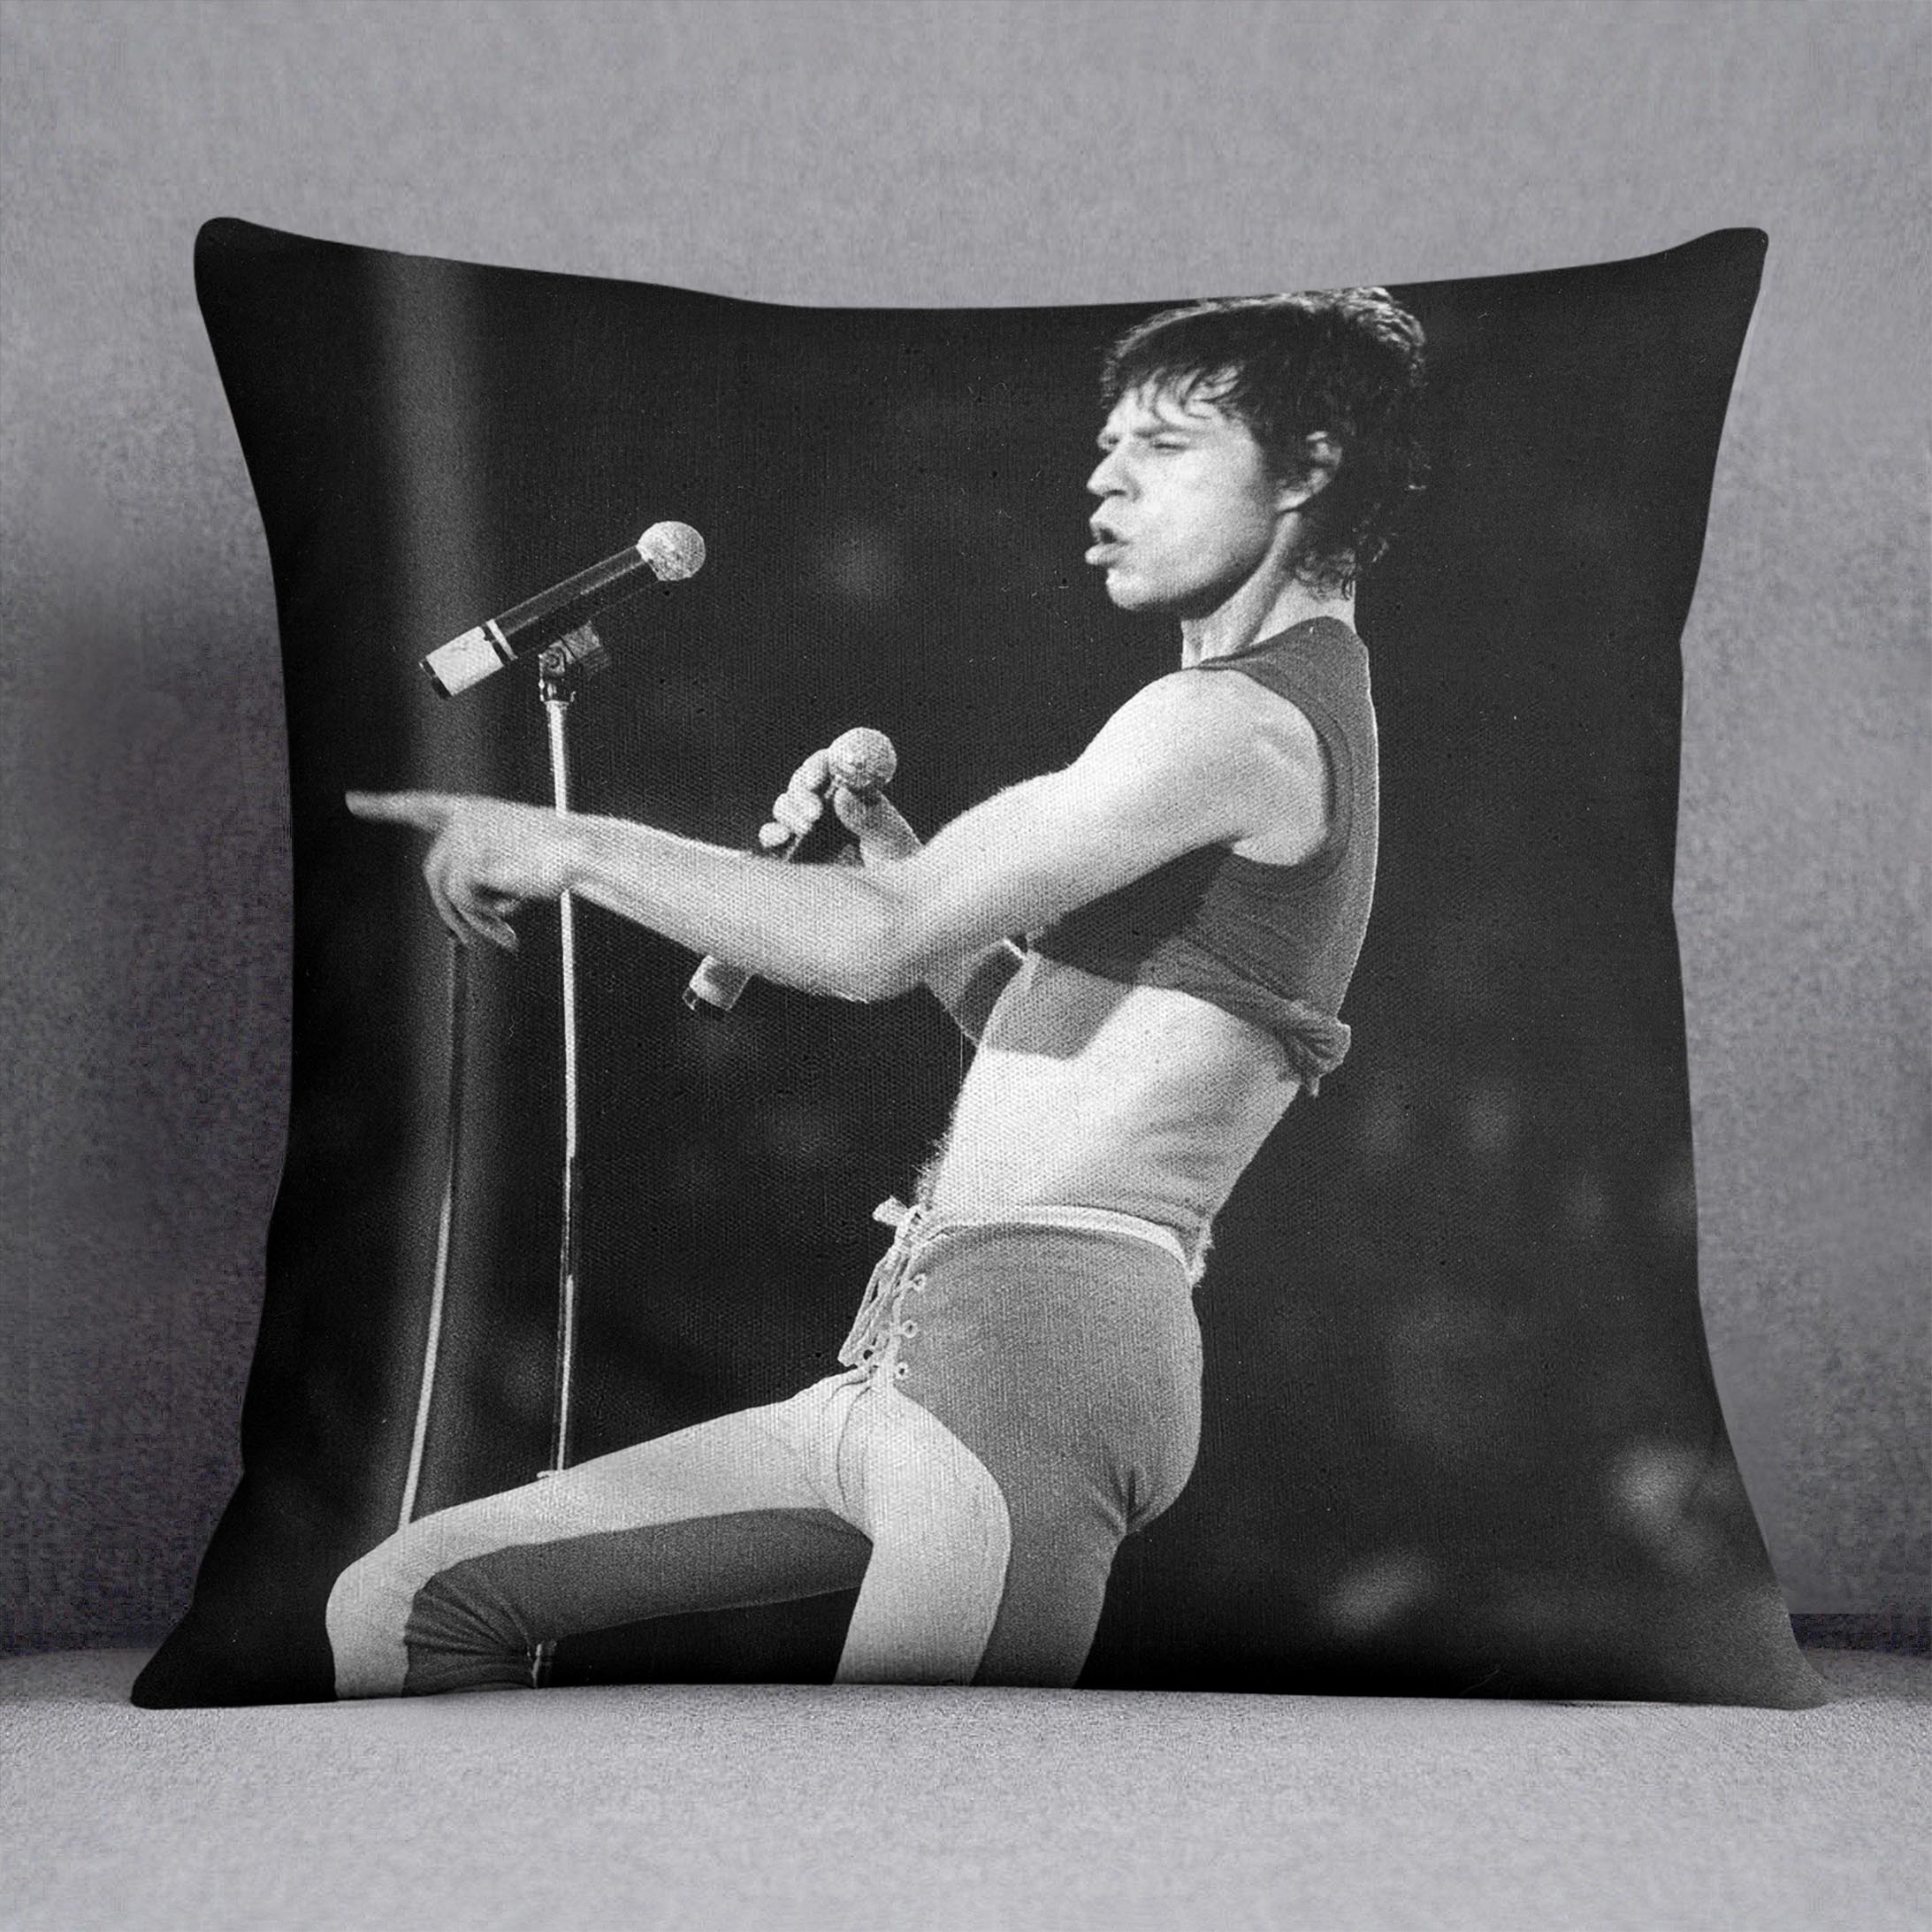 Mick Jagger in lycra Cushion